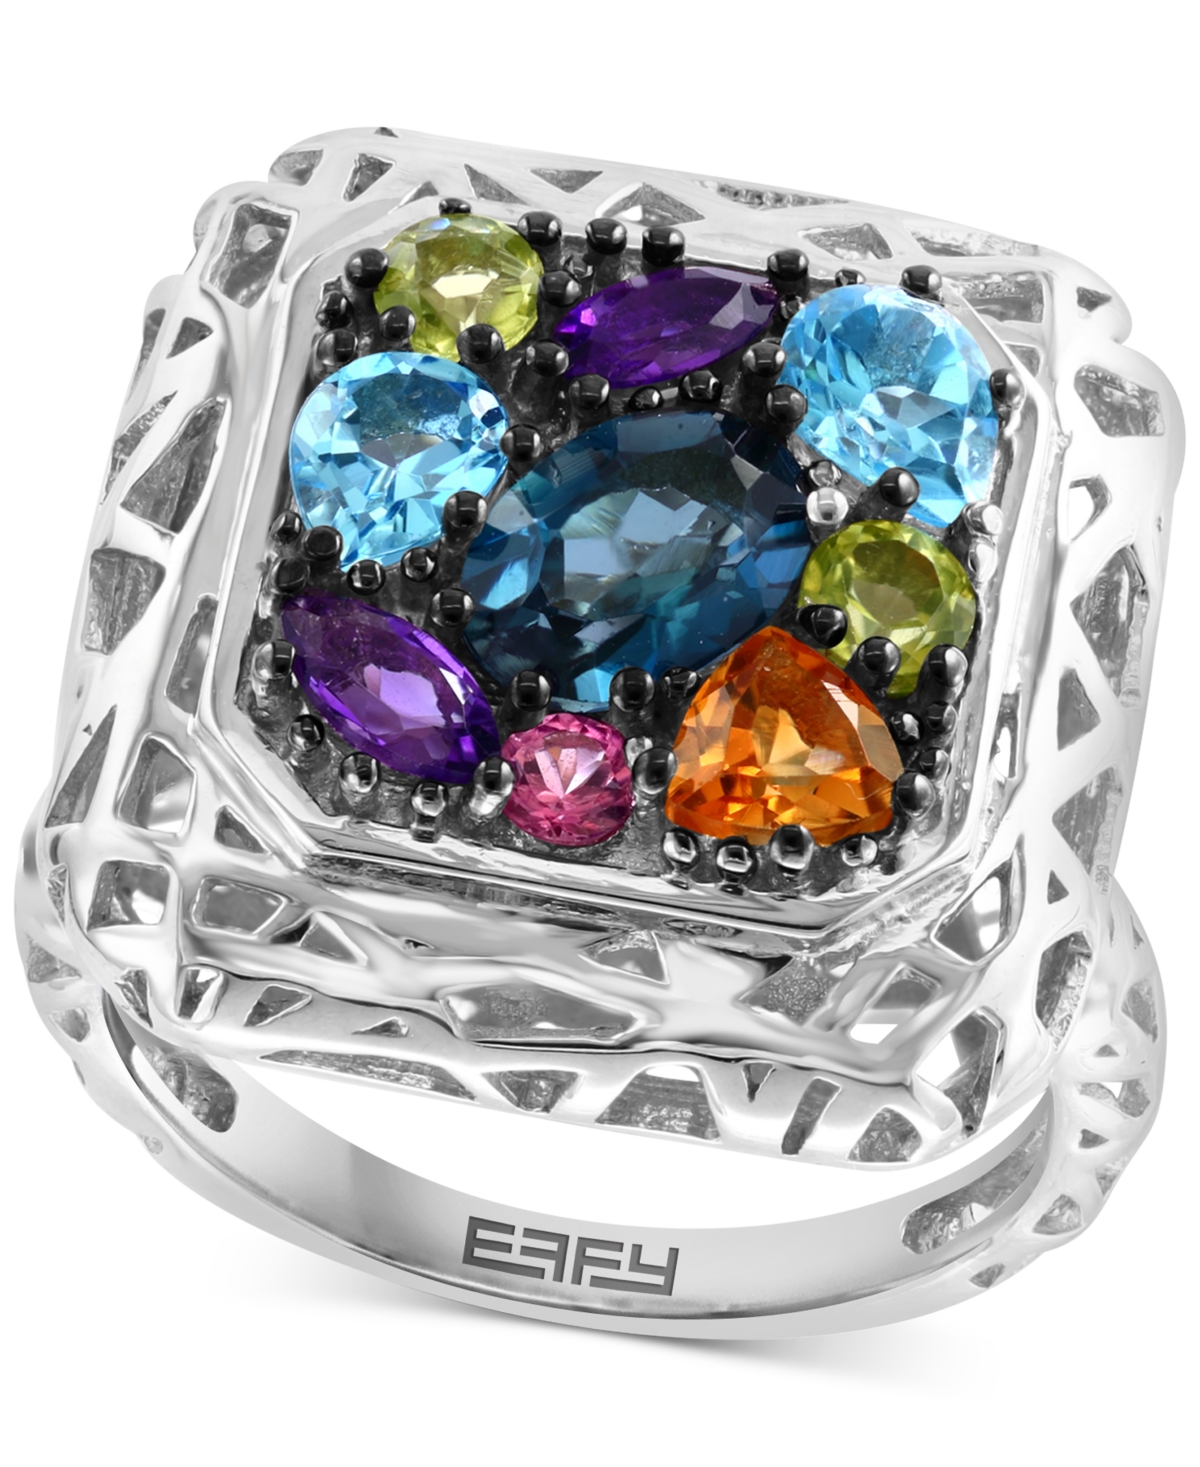 Effy Multi-Gemstone Cluster Ring (2-1/3 ct. t.w.) in Sterling Silver - Multi Gemstone